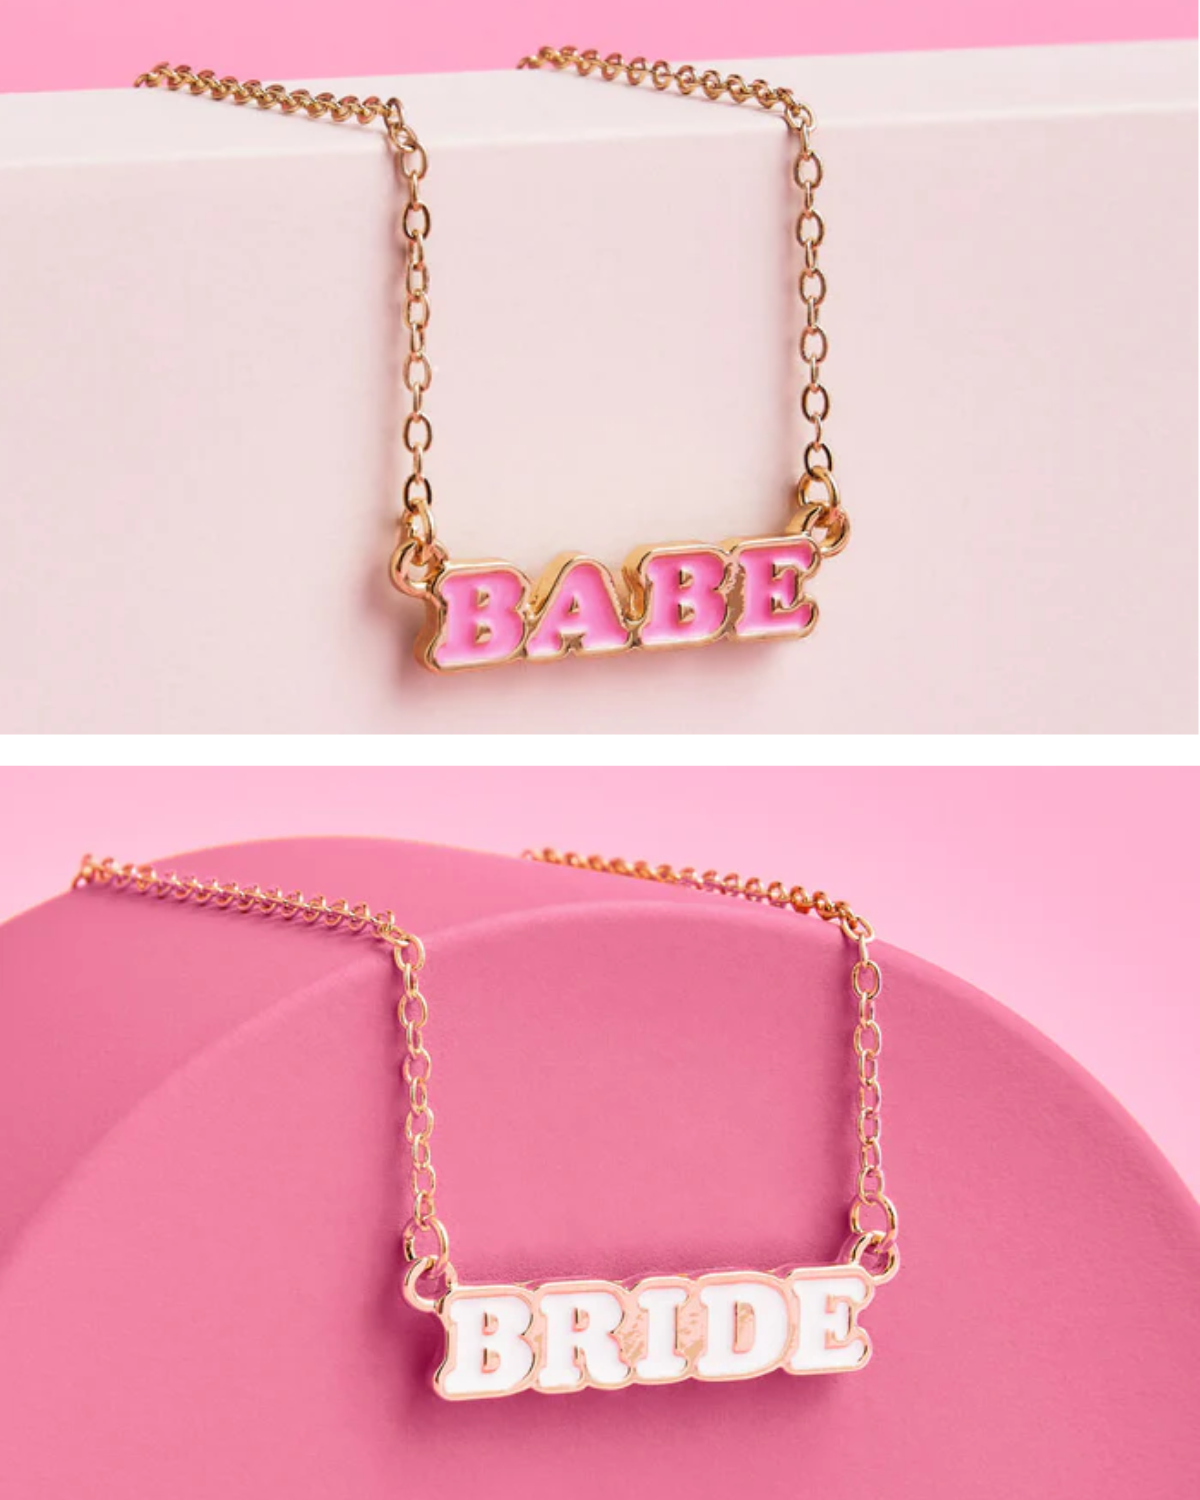 Bride + Babe Pack - 5 enamel necklaces